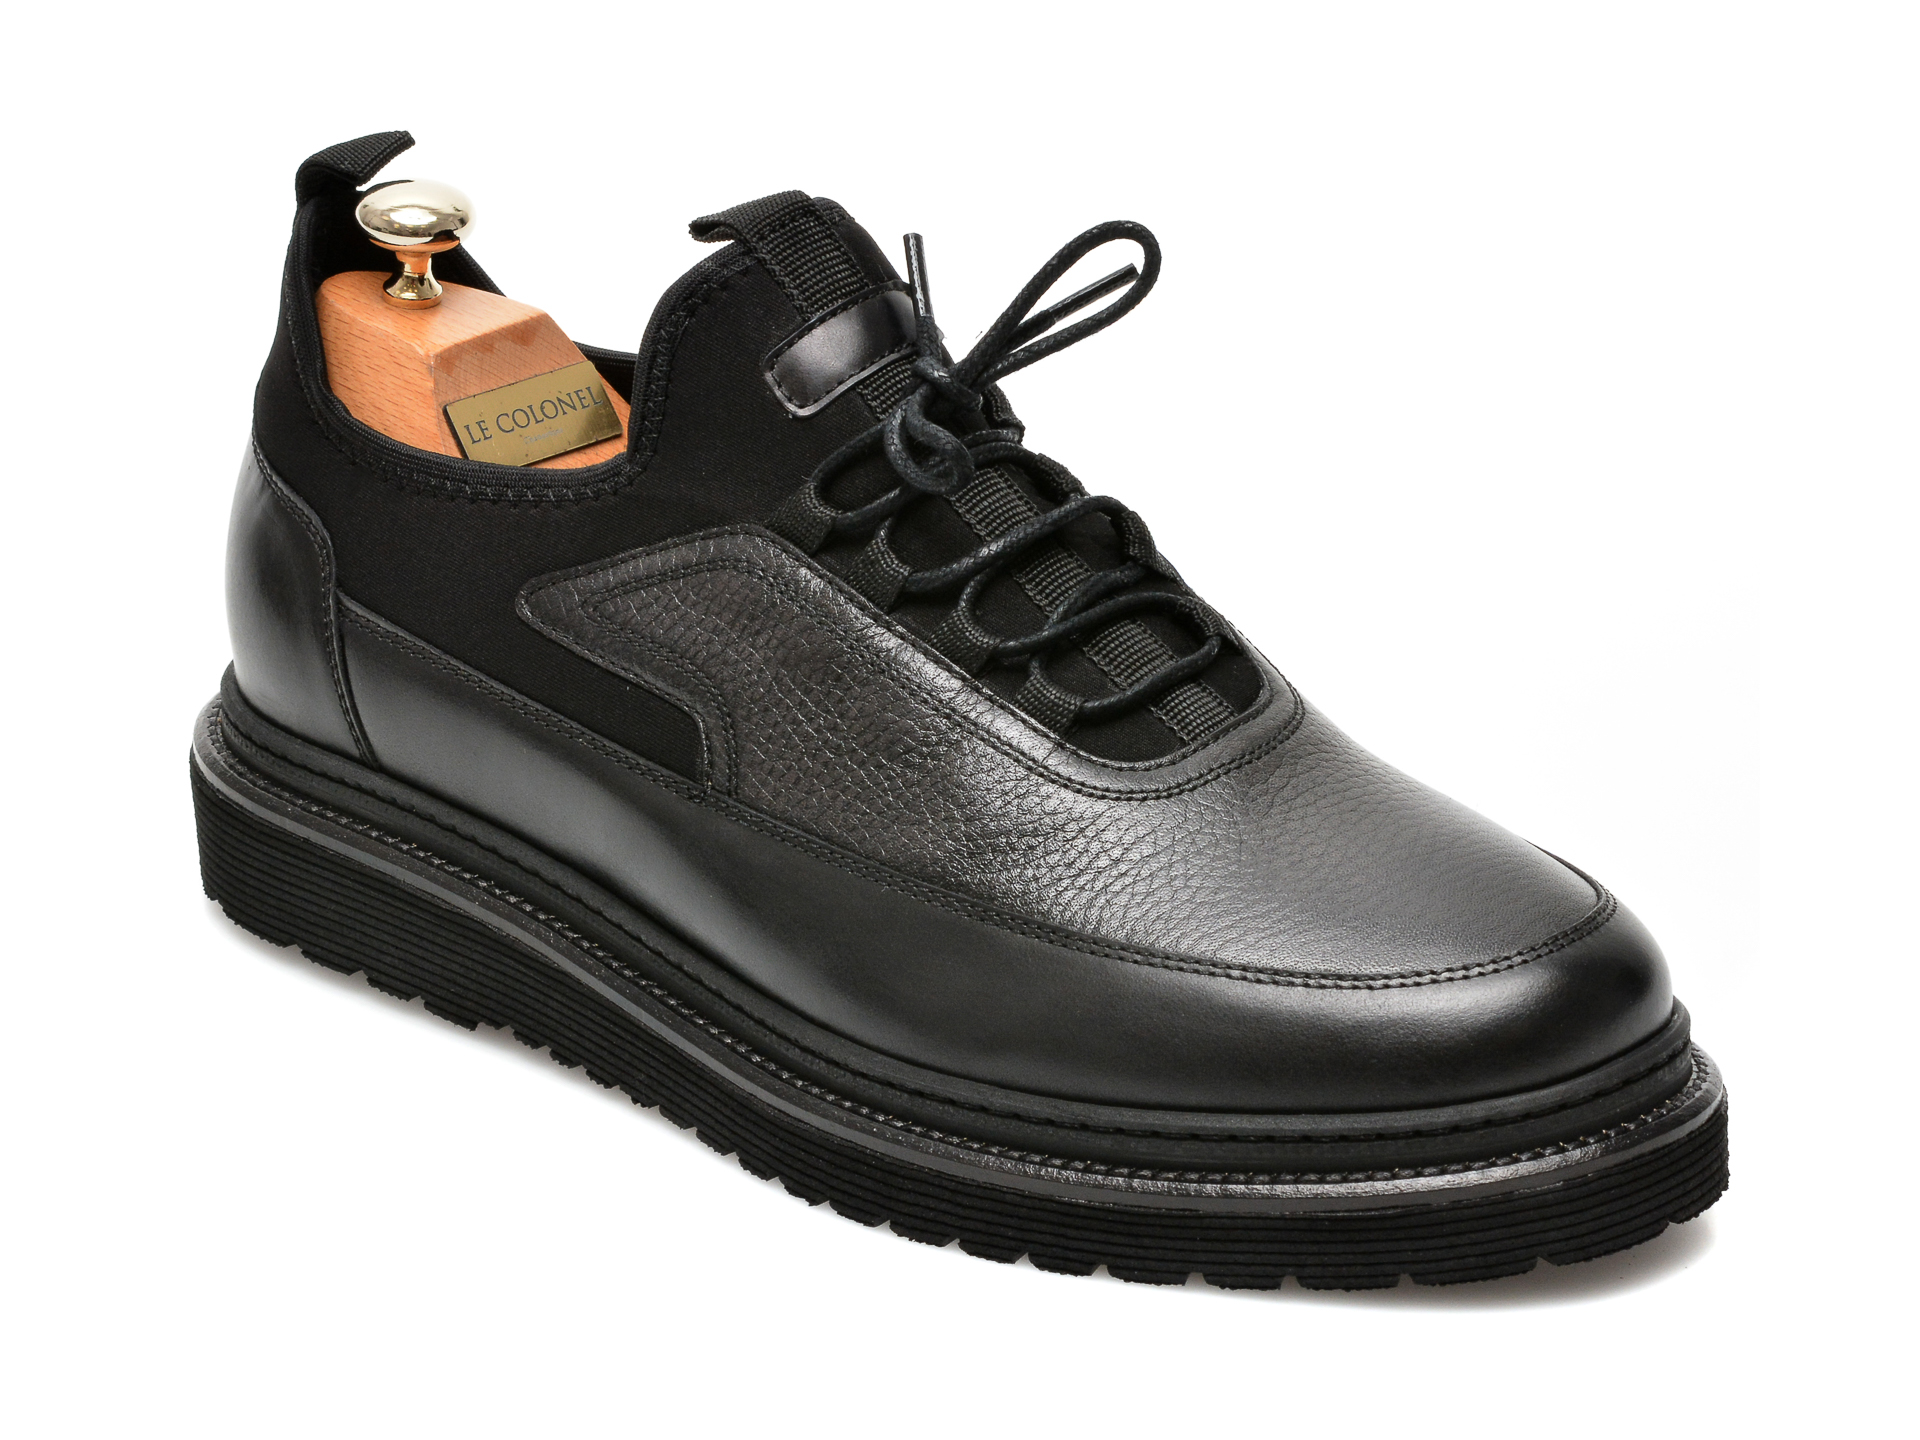 Pantofi LE COLONEL negri, 64816, din material textil si piele naturala Le Colonel imagine 2022 reducere